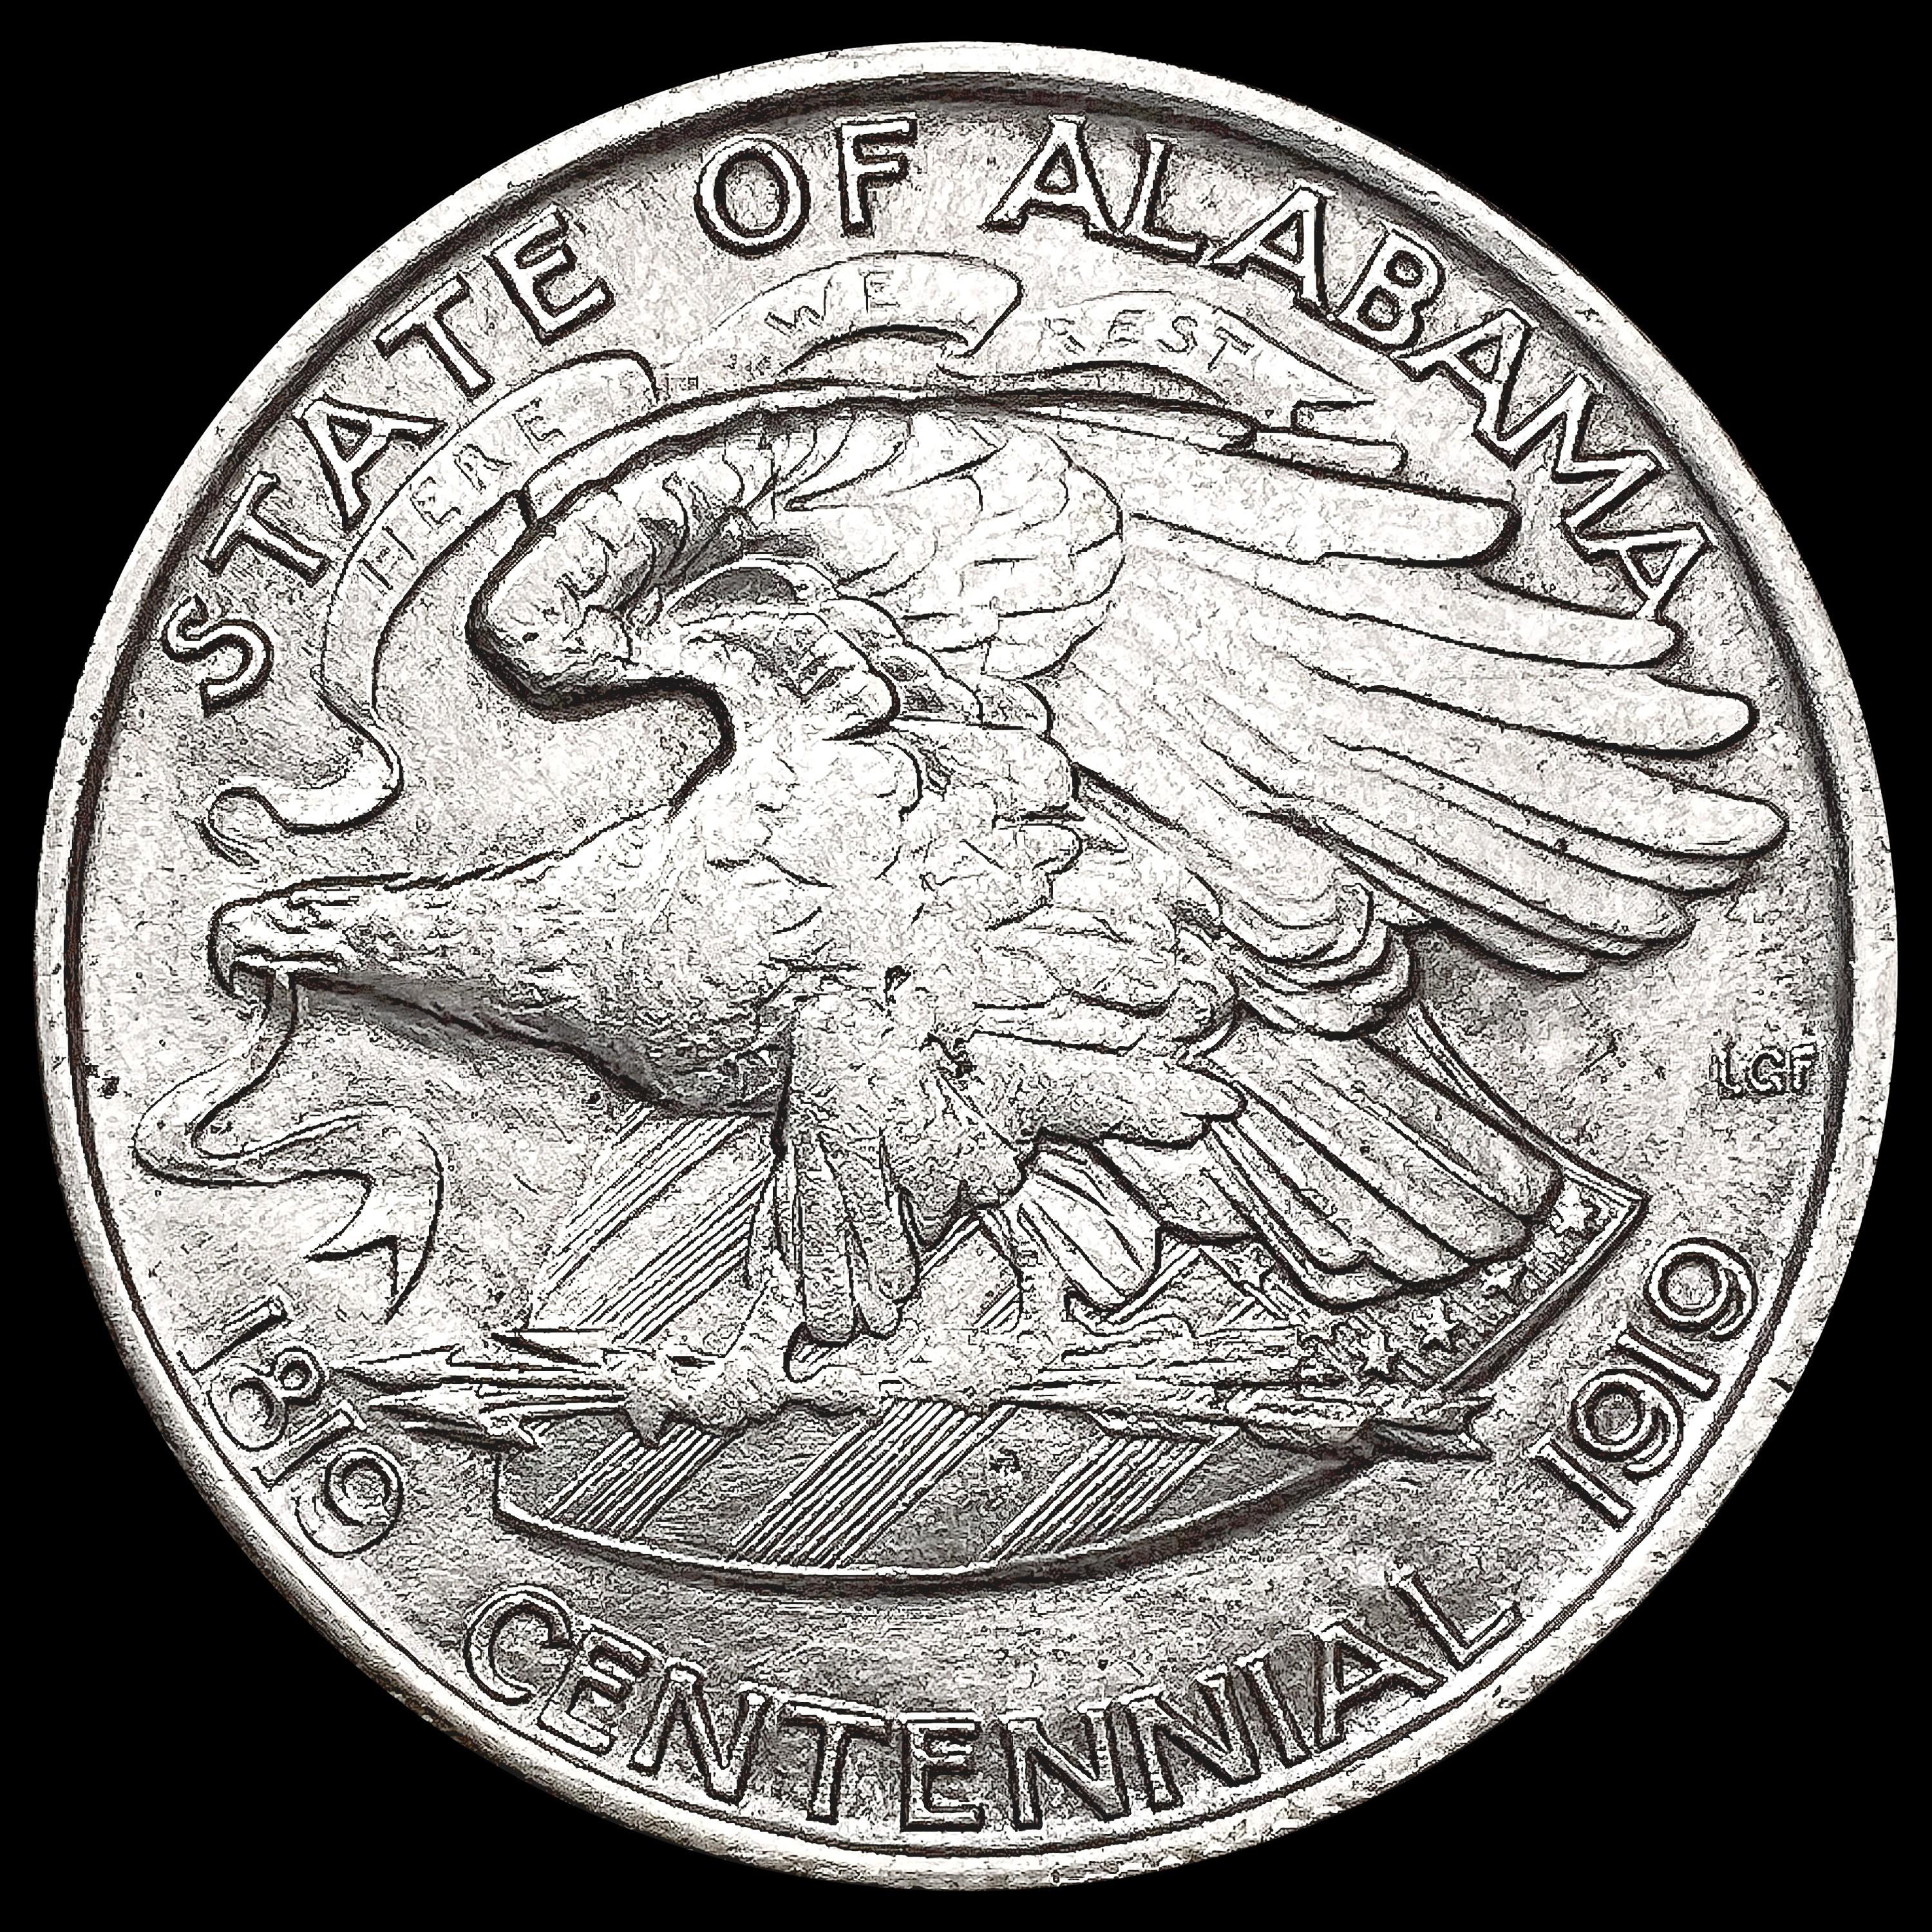 1921 Alabama Half Dollar CHOICE AU